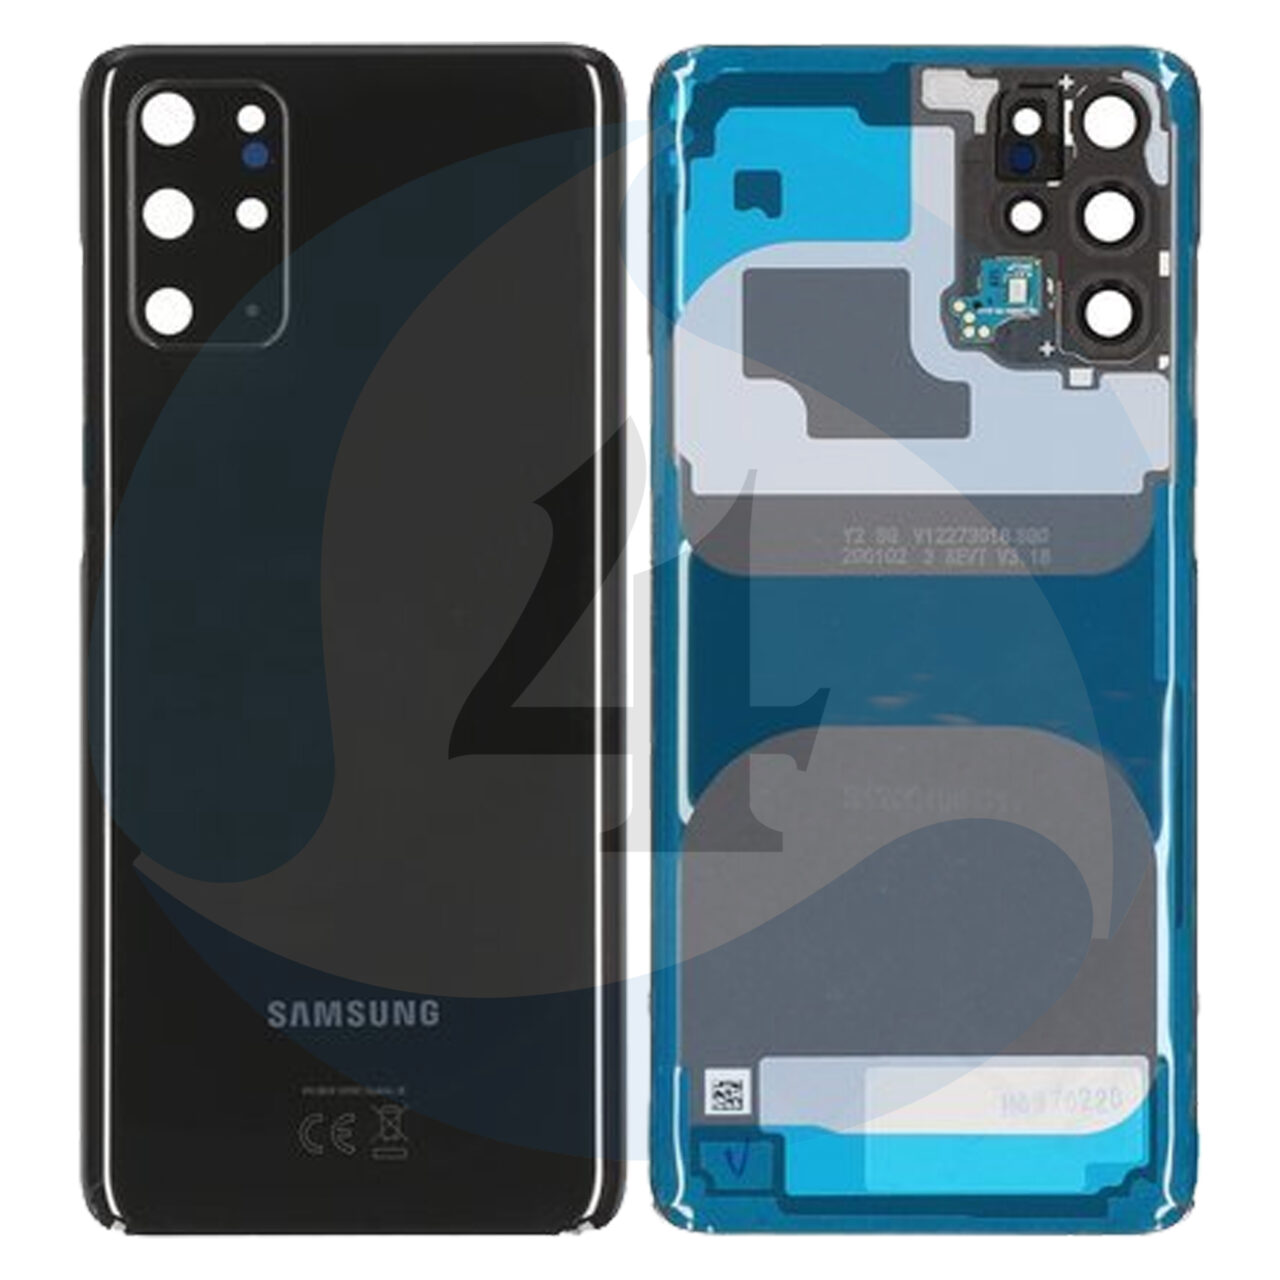 Samsung galaxy S20 plus 5 G G986 G985 backcover black